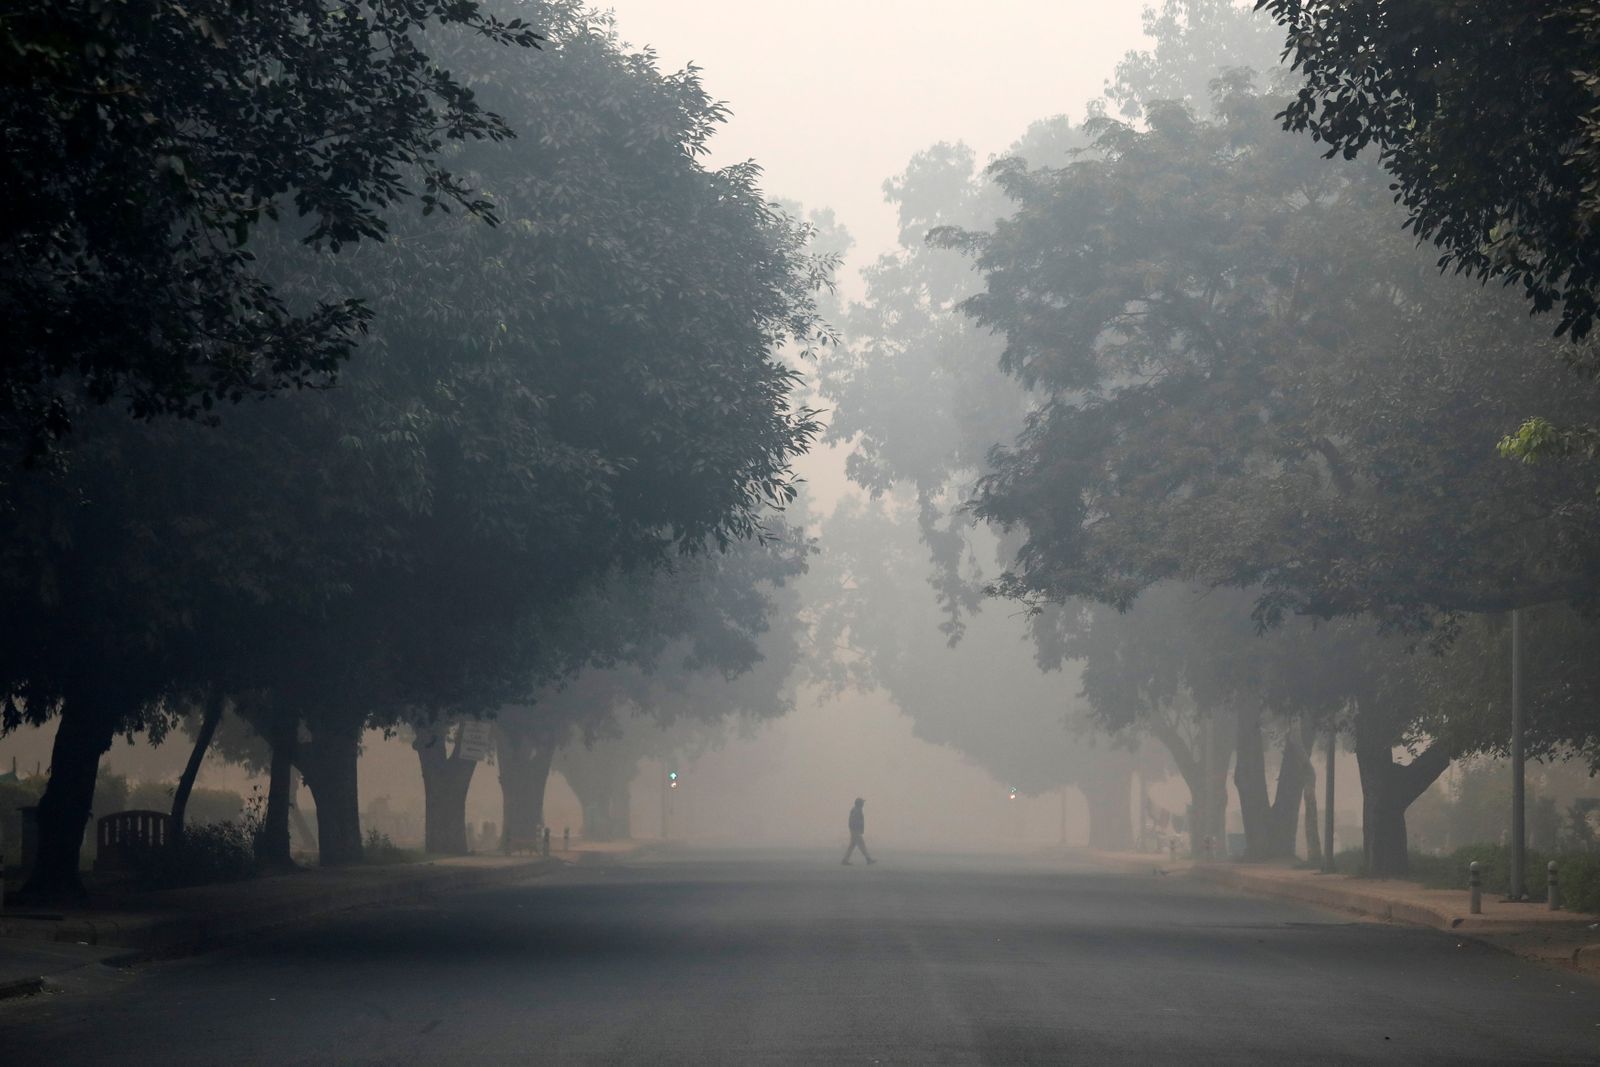 Smog v indickém Dillí